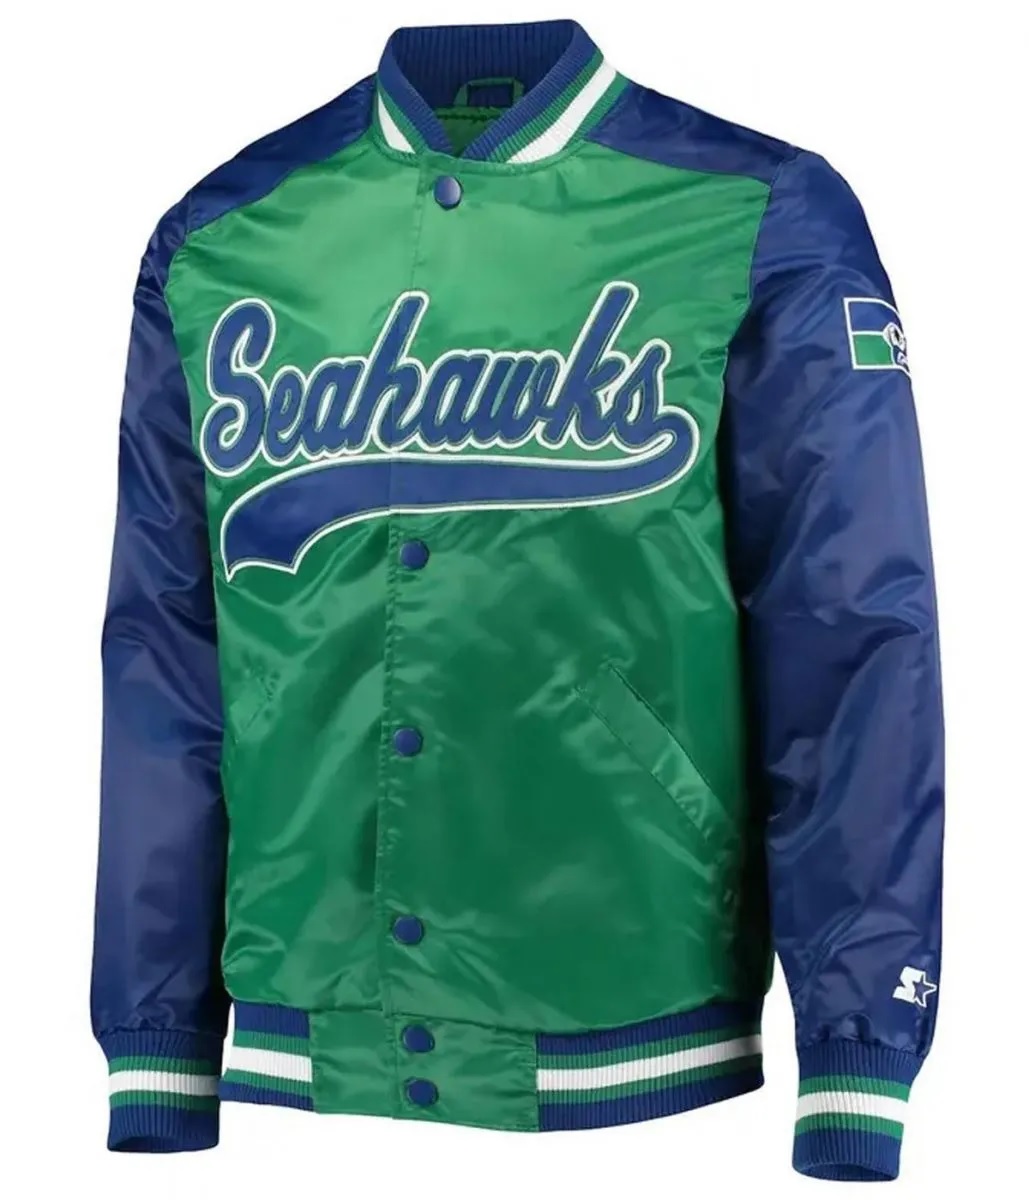 Seattle Seahawks Starter Blue and Green Jacket